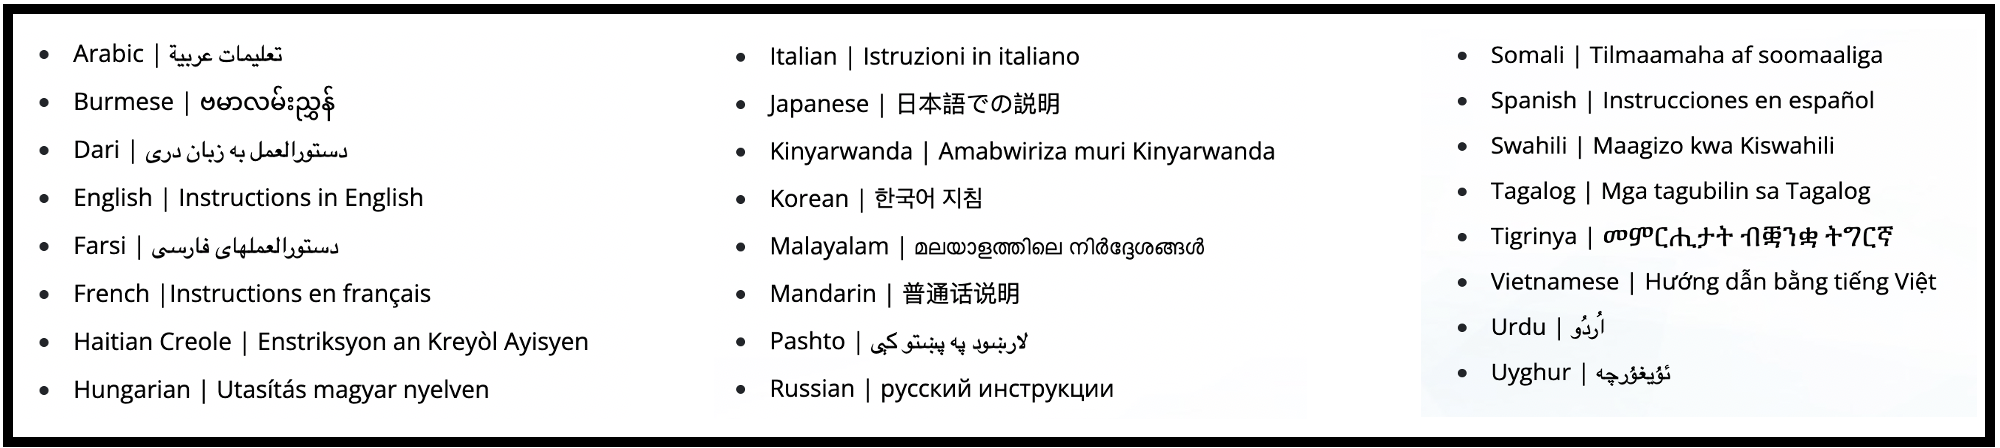 TARJIMLY volunteers help with many languages